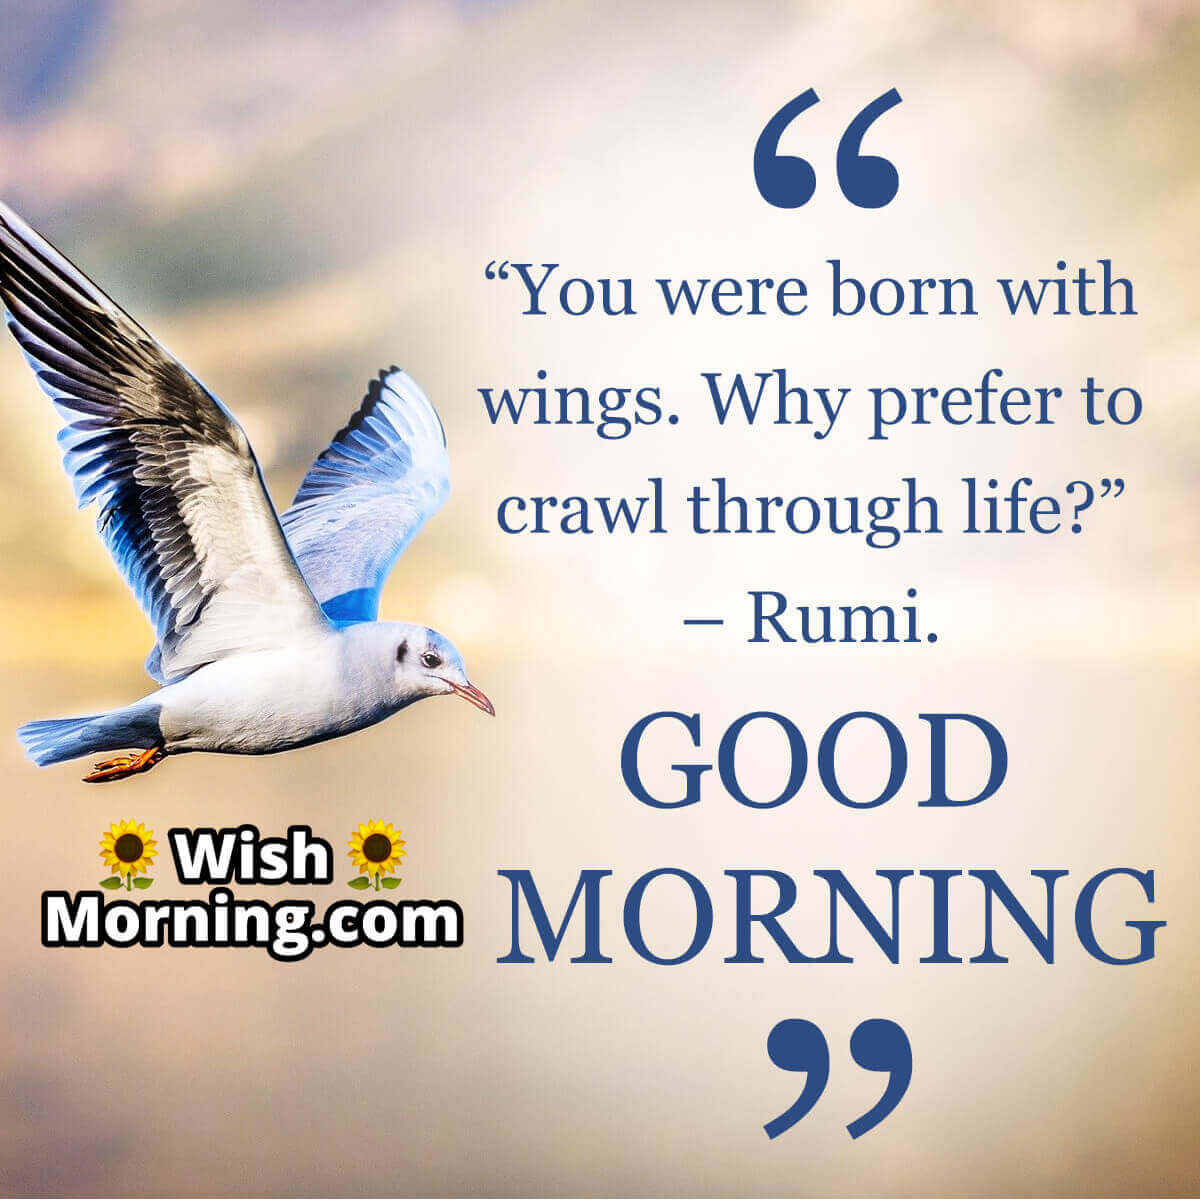 Good Morning Rumi Image